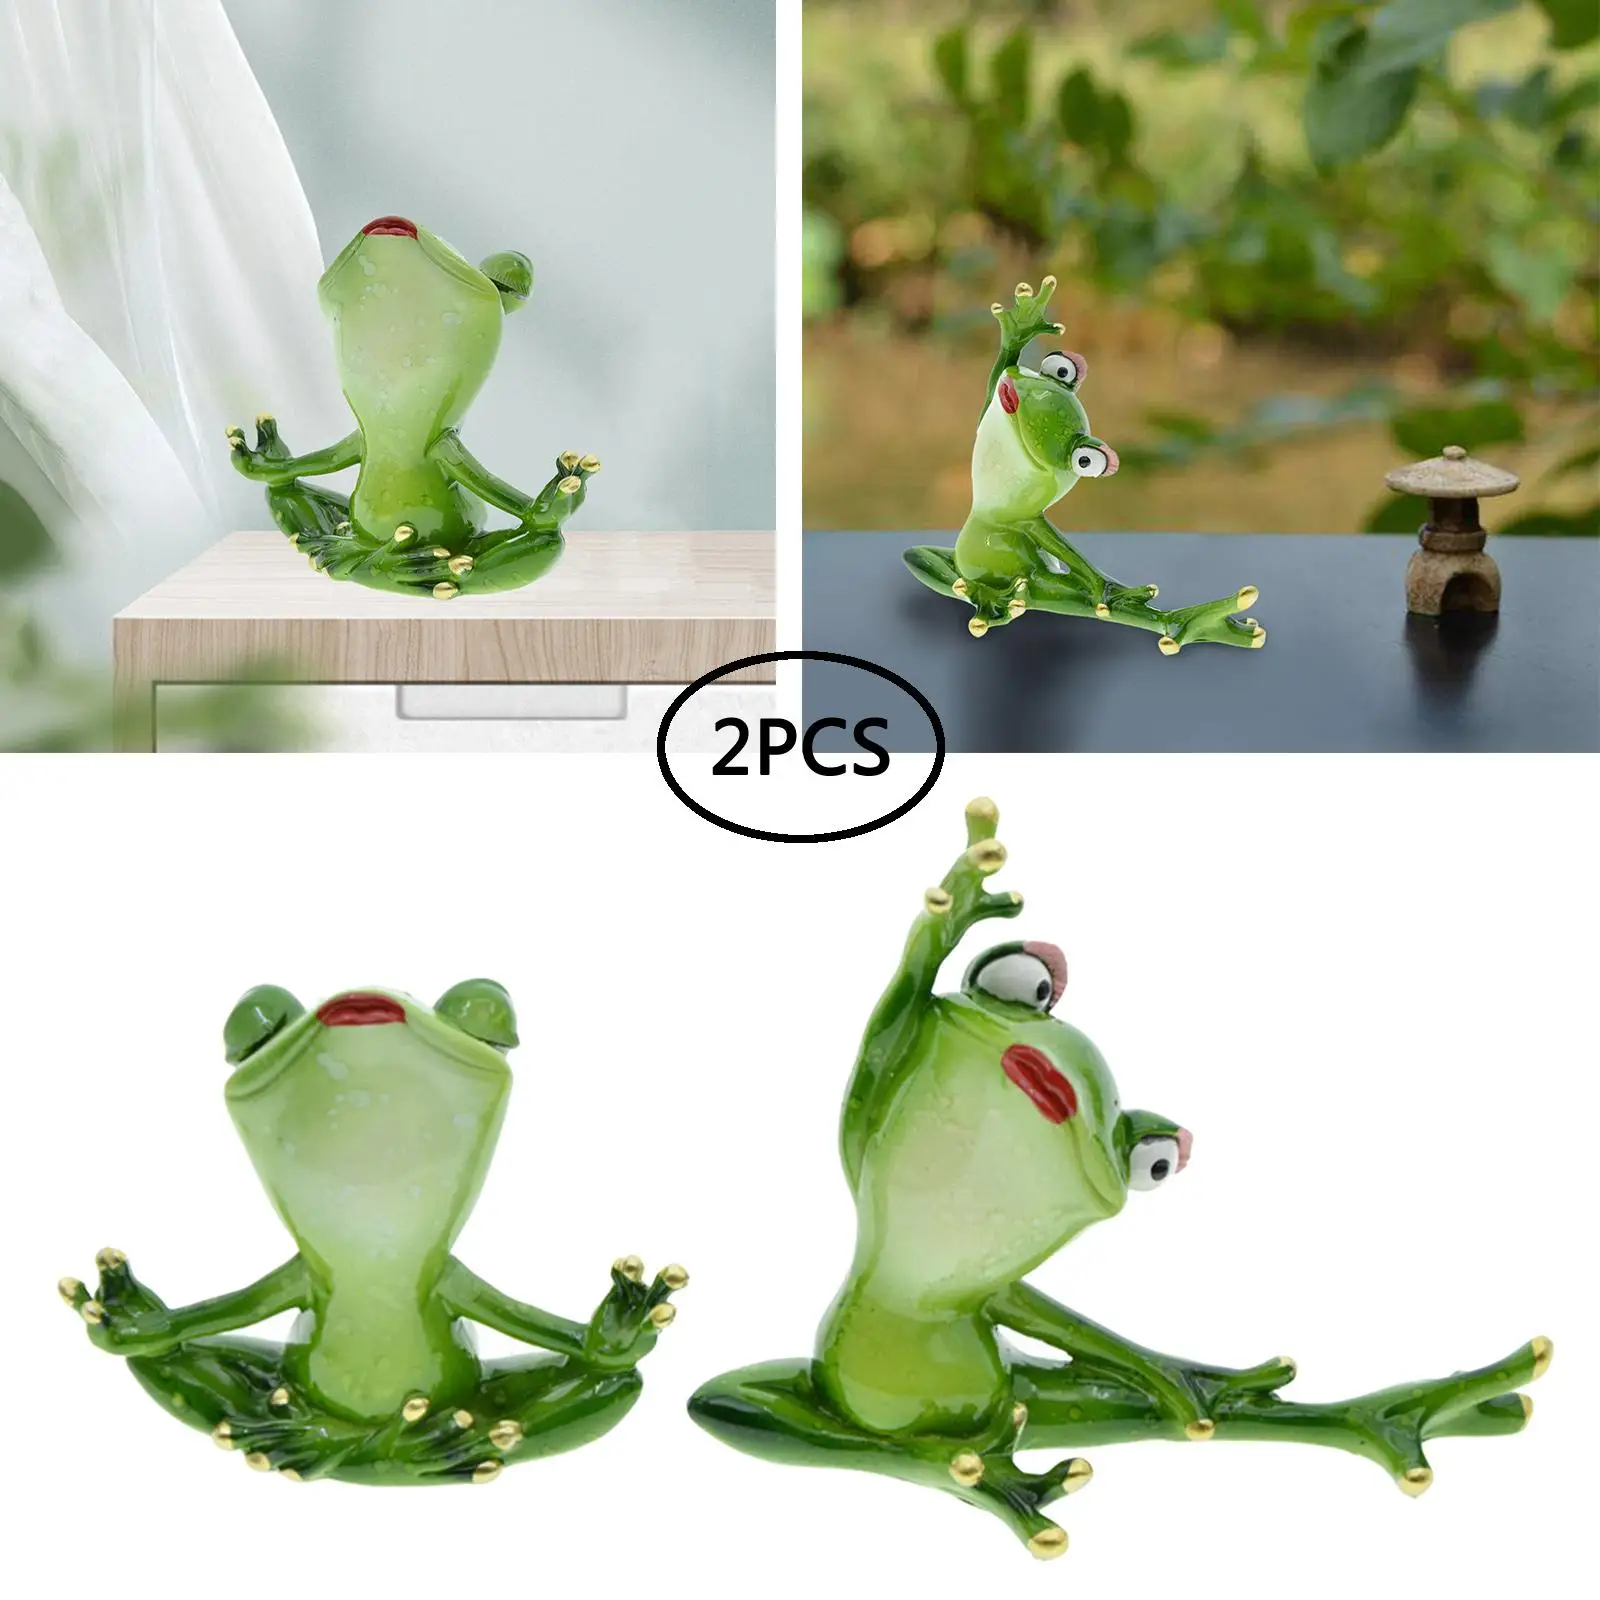 2Pcs Resin Yoga Frog Figurine Statue Sculpture Model Art Crafts for Table Shopwindow Office Photo Props Bookshelf Bedroom Decor